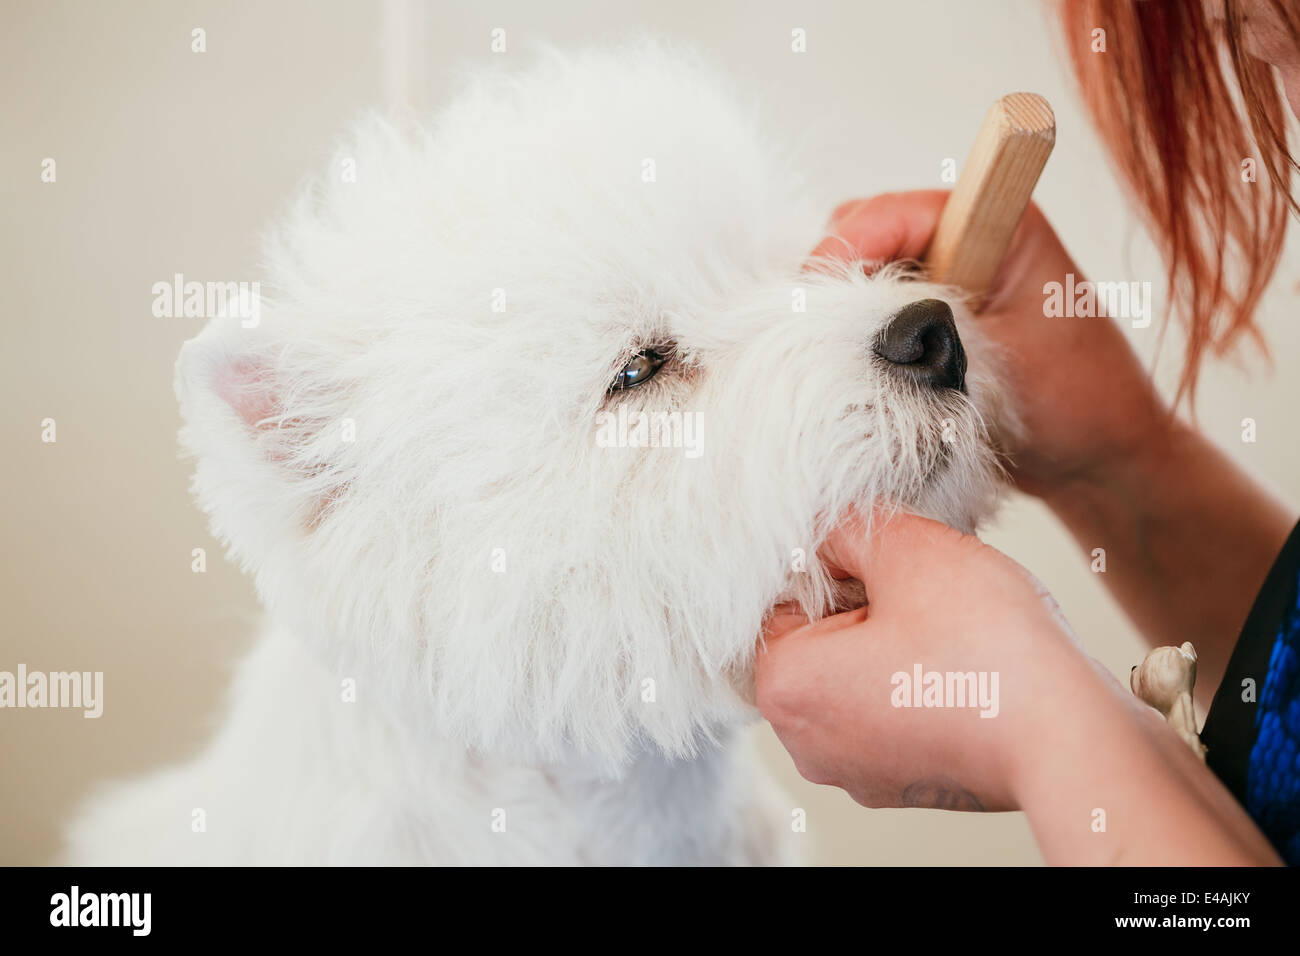 White west Highland White Terrier (Westie, Westy) dog close up portrait Stock Photo